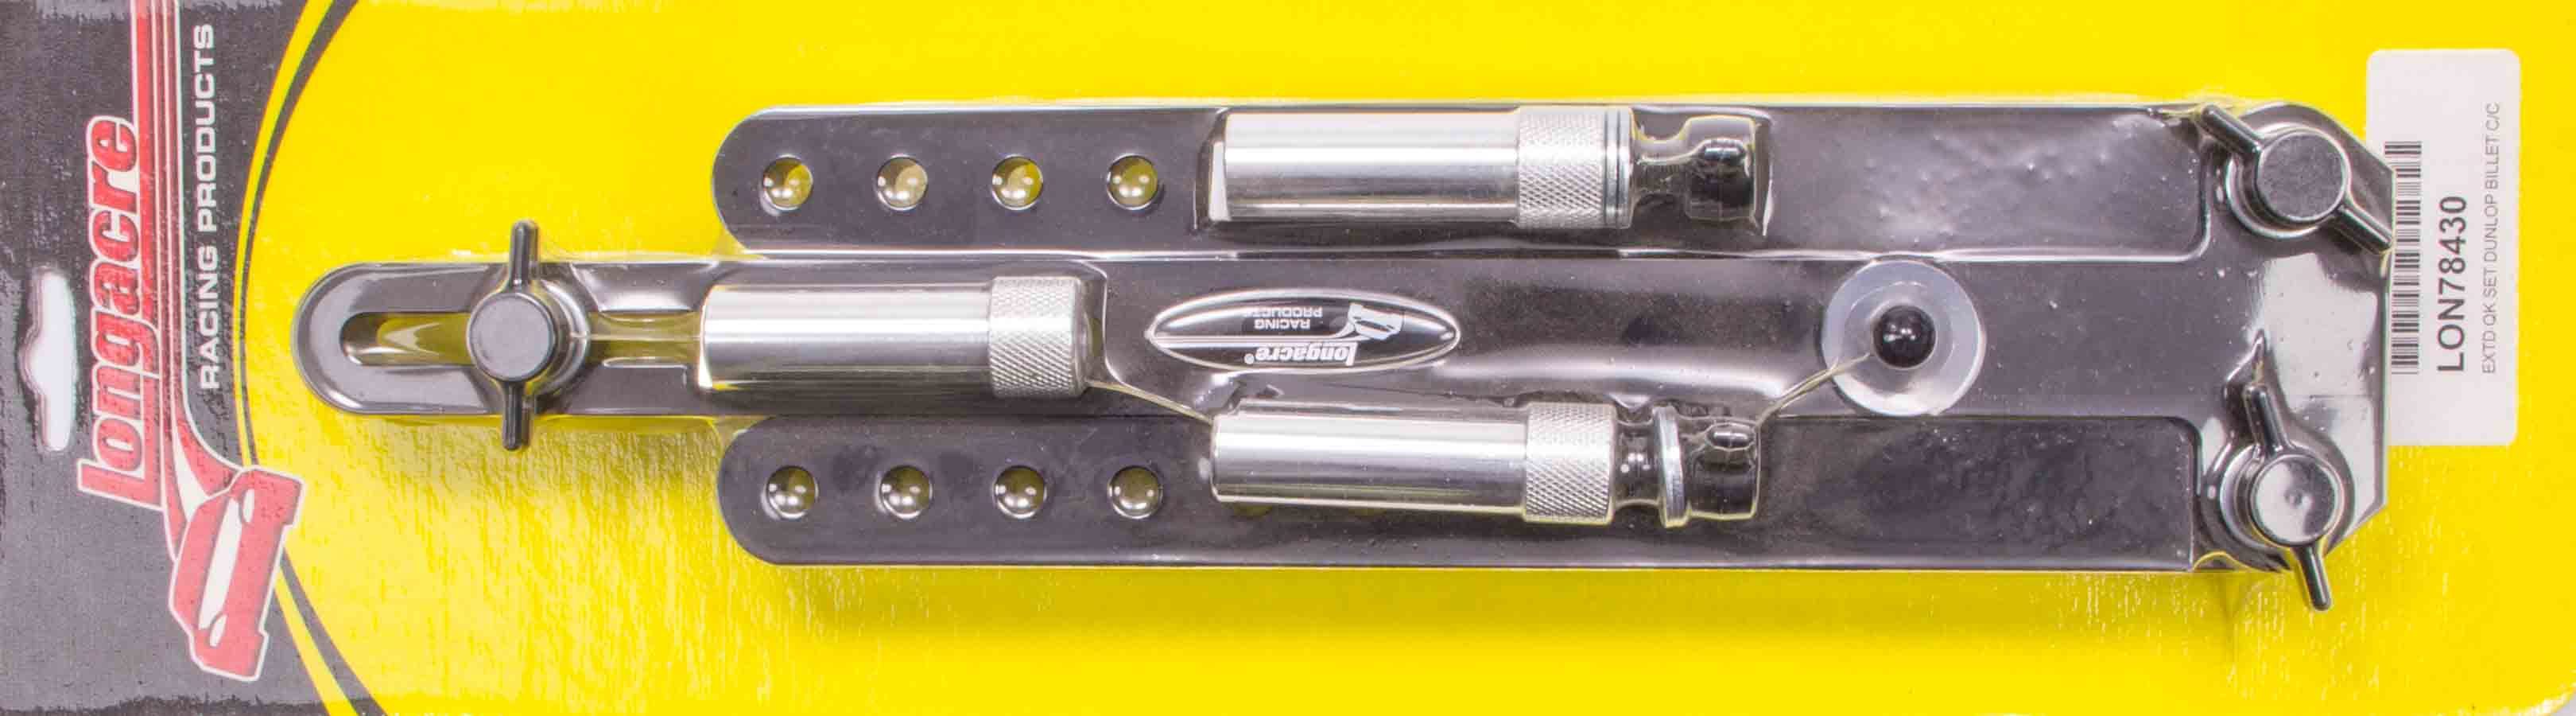 Caster / Camber Gauge Adapter - 5/16-18 in Gauge Bolt to 13-22 in Wheel Rims - Aluminum - Black Powder Coat - Universal Spindle - Kit